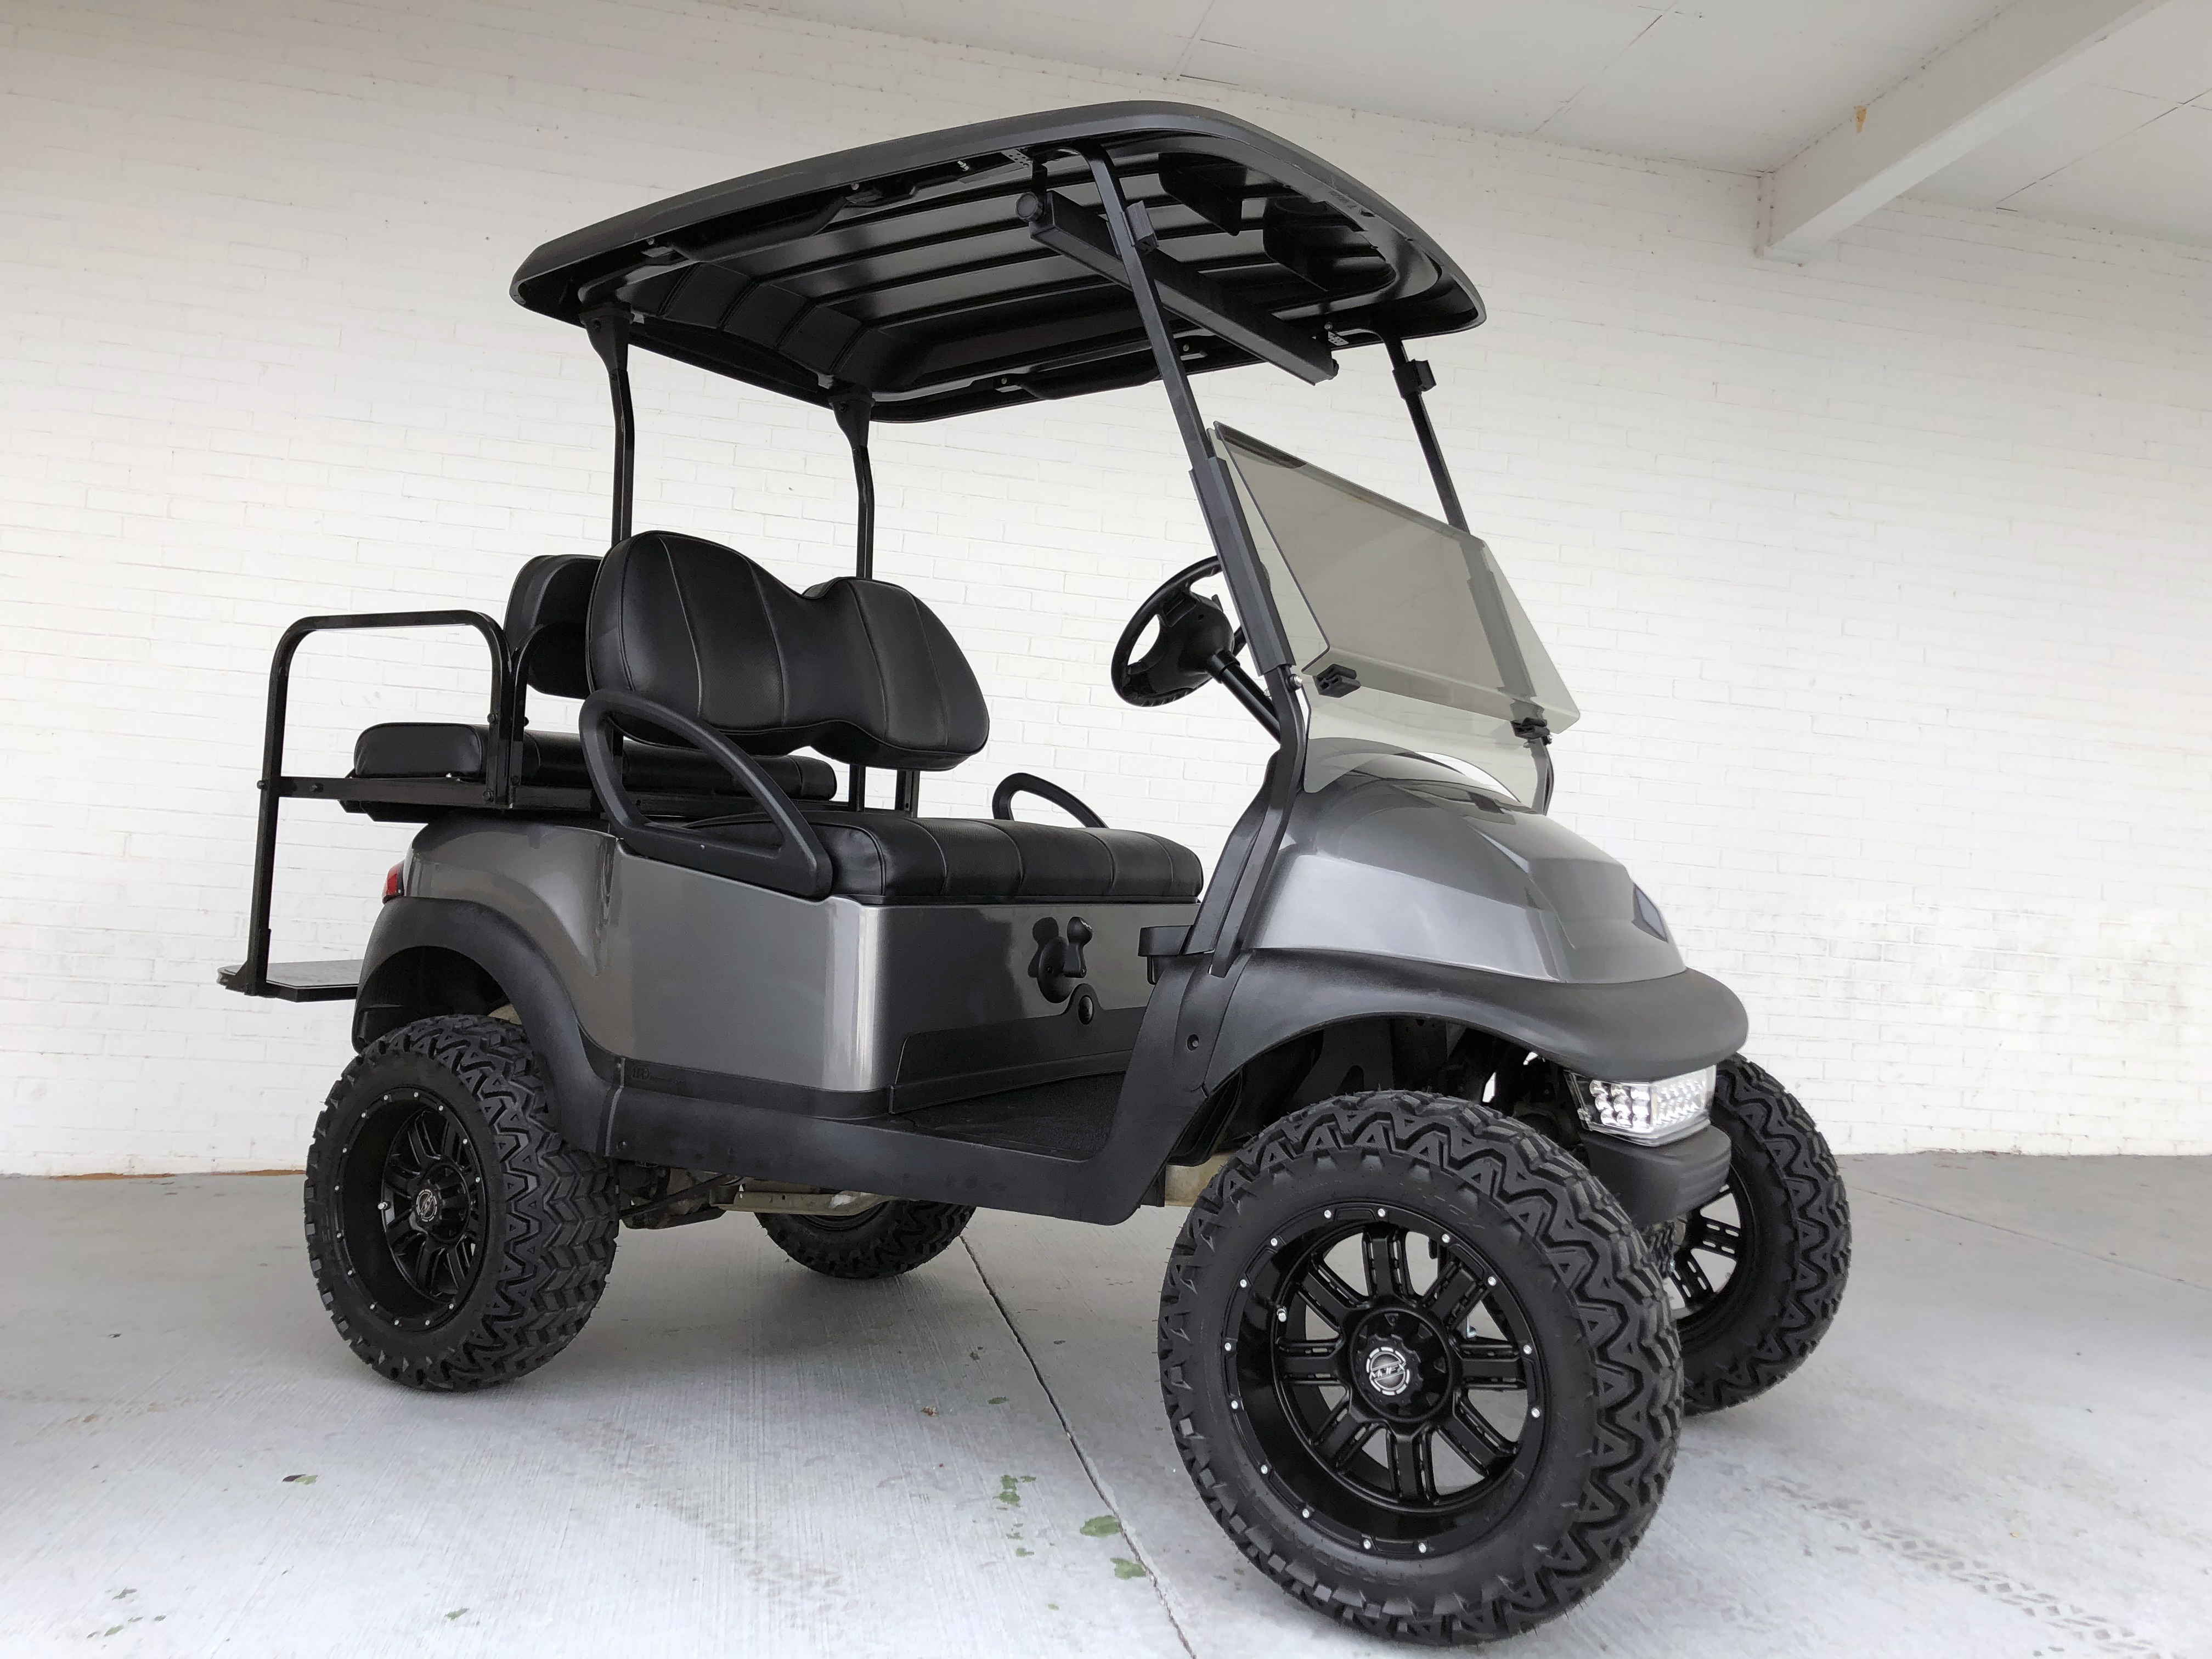 Charcoal Lifted GAS Club Car Precedent Golf Cart | Golf Carts - Lifted